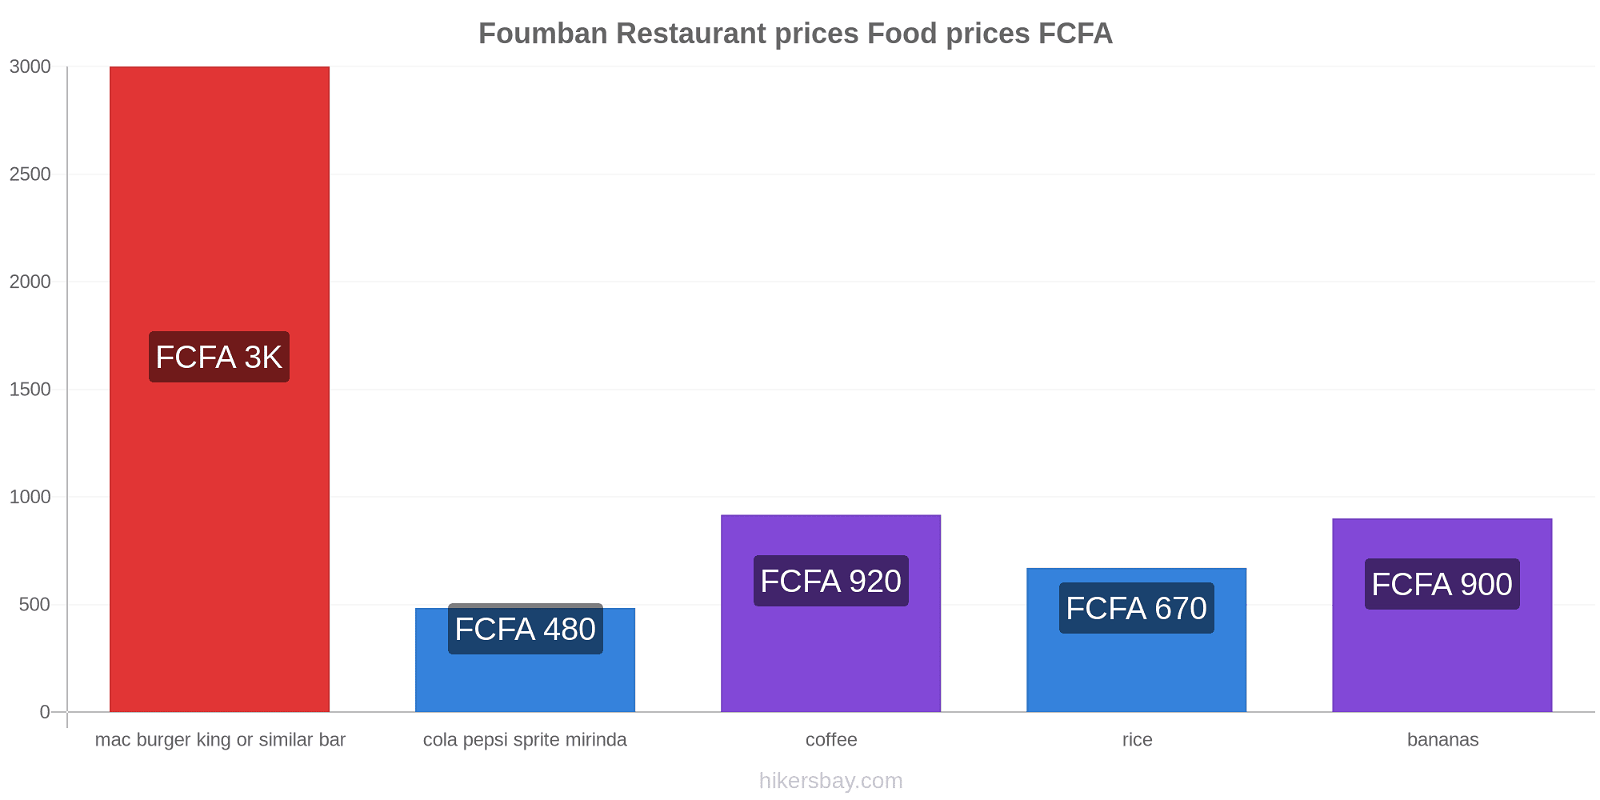 Foumban price changes hikersbay.com